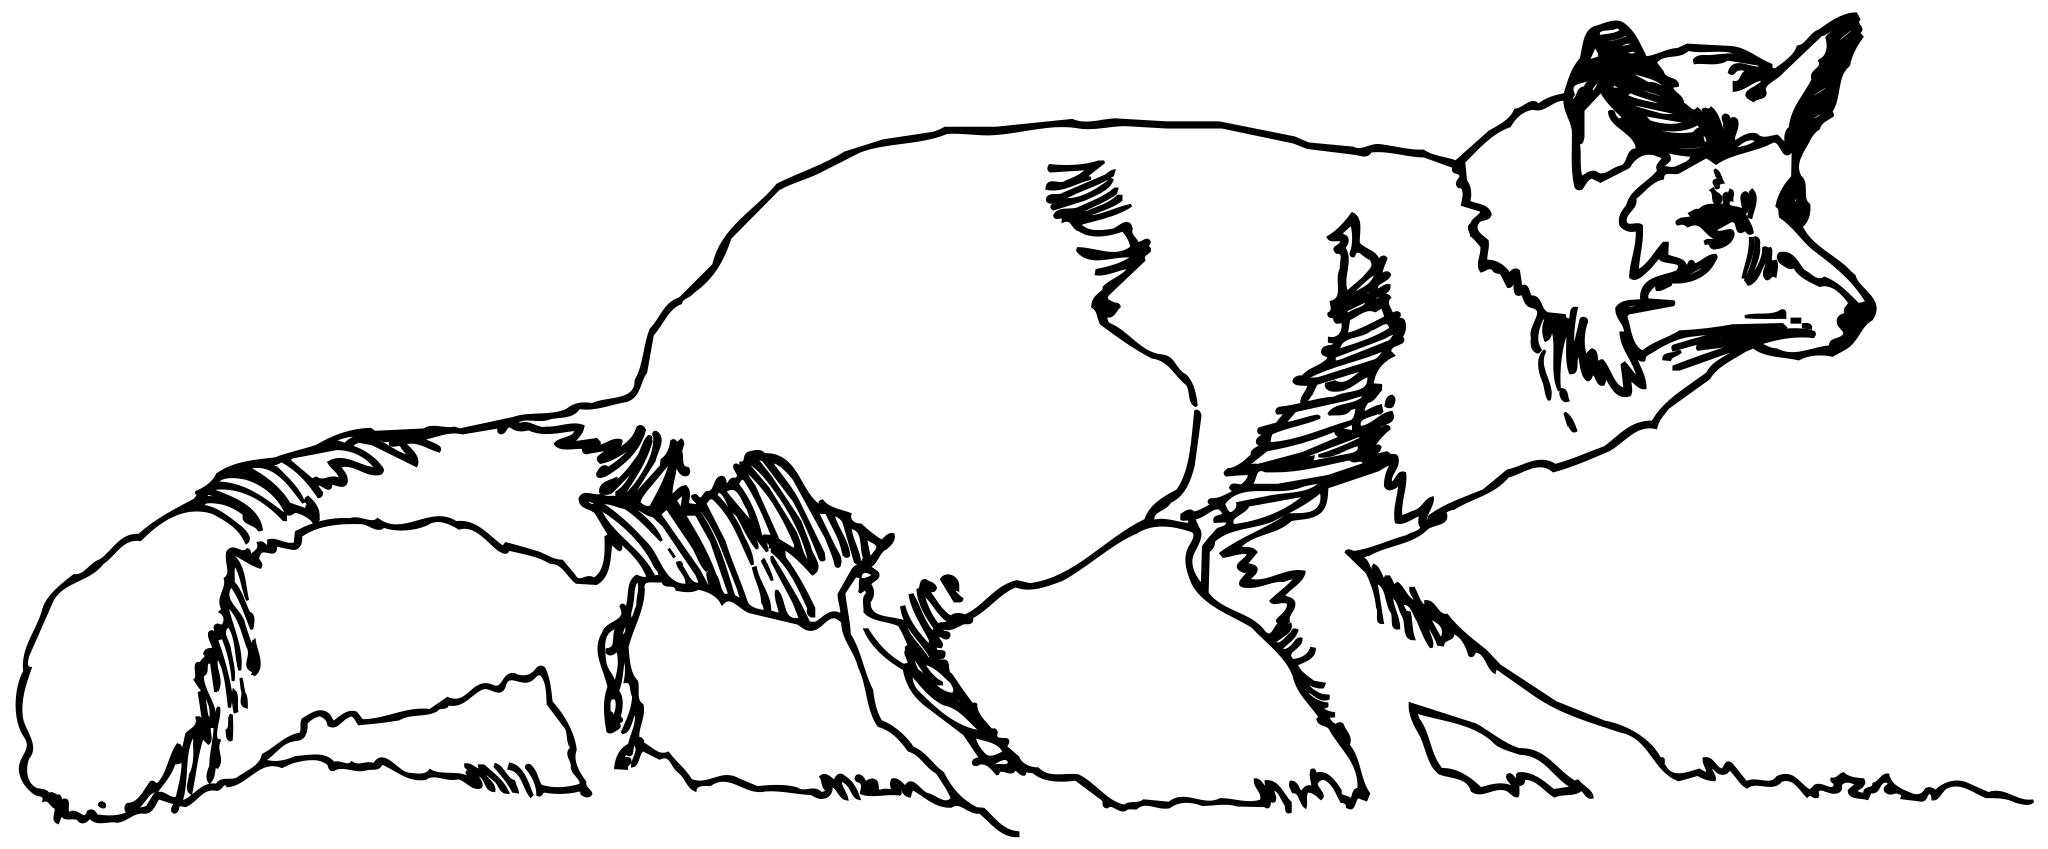 Рисунок хвост животного ч.б